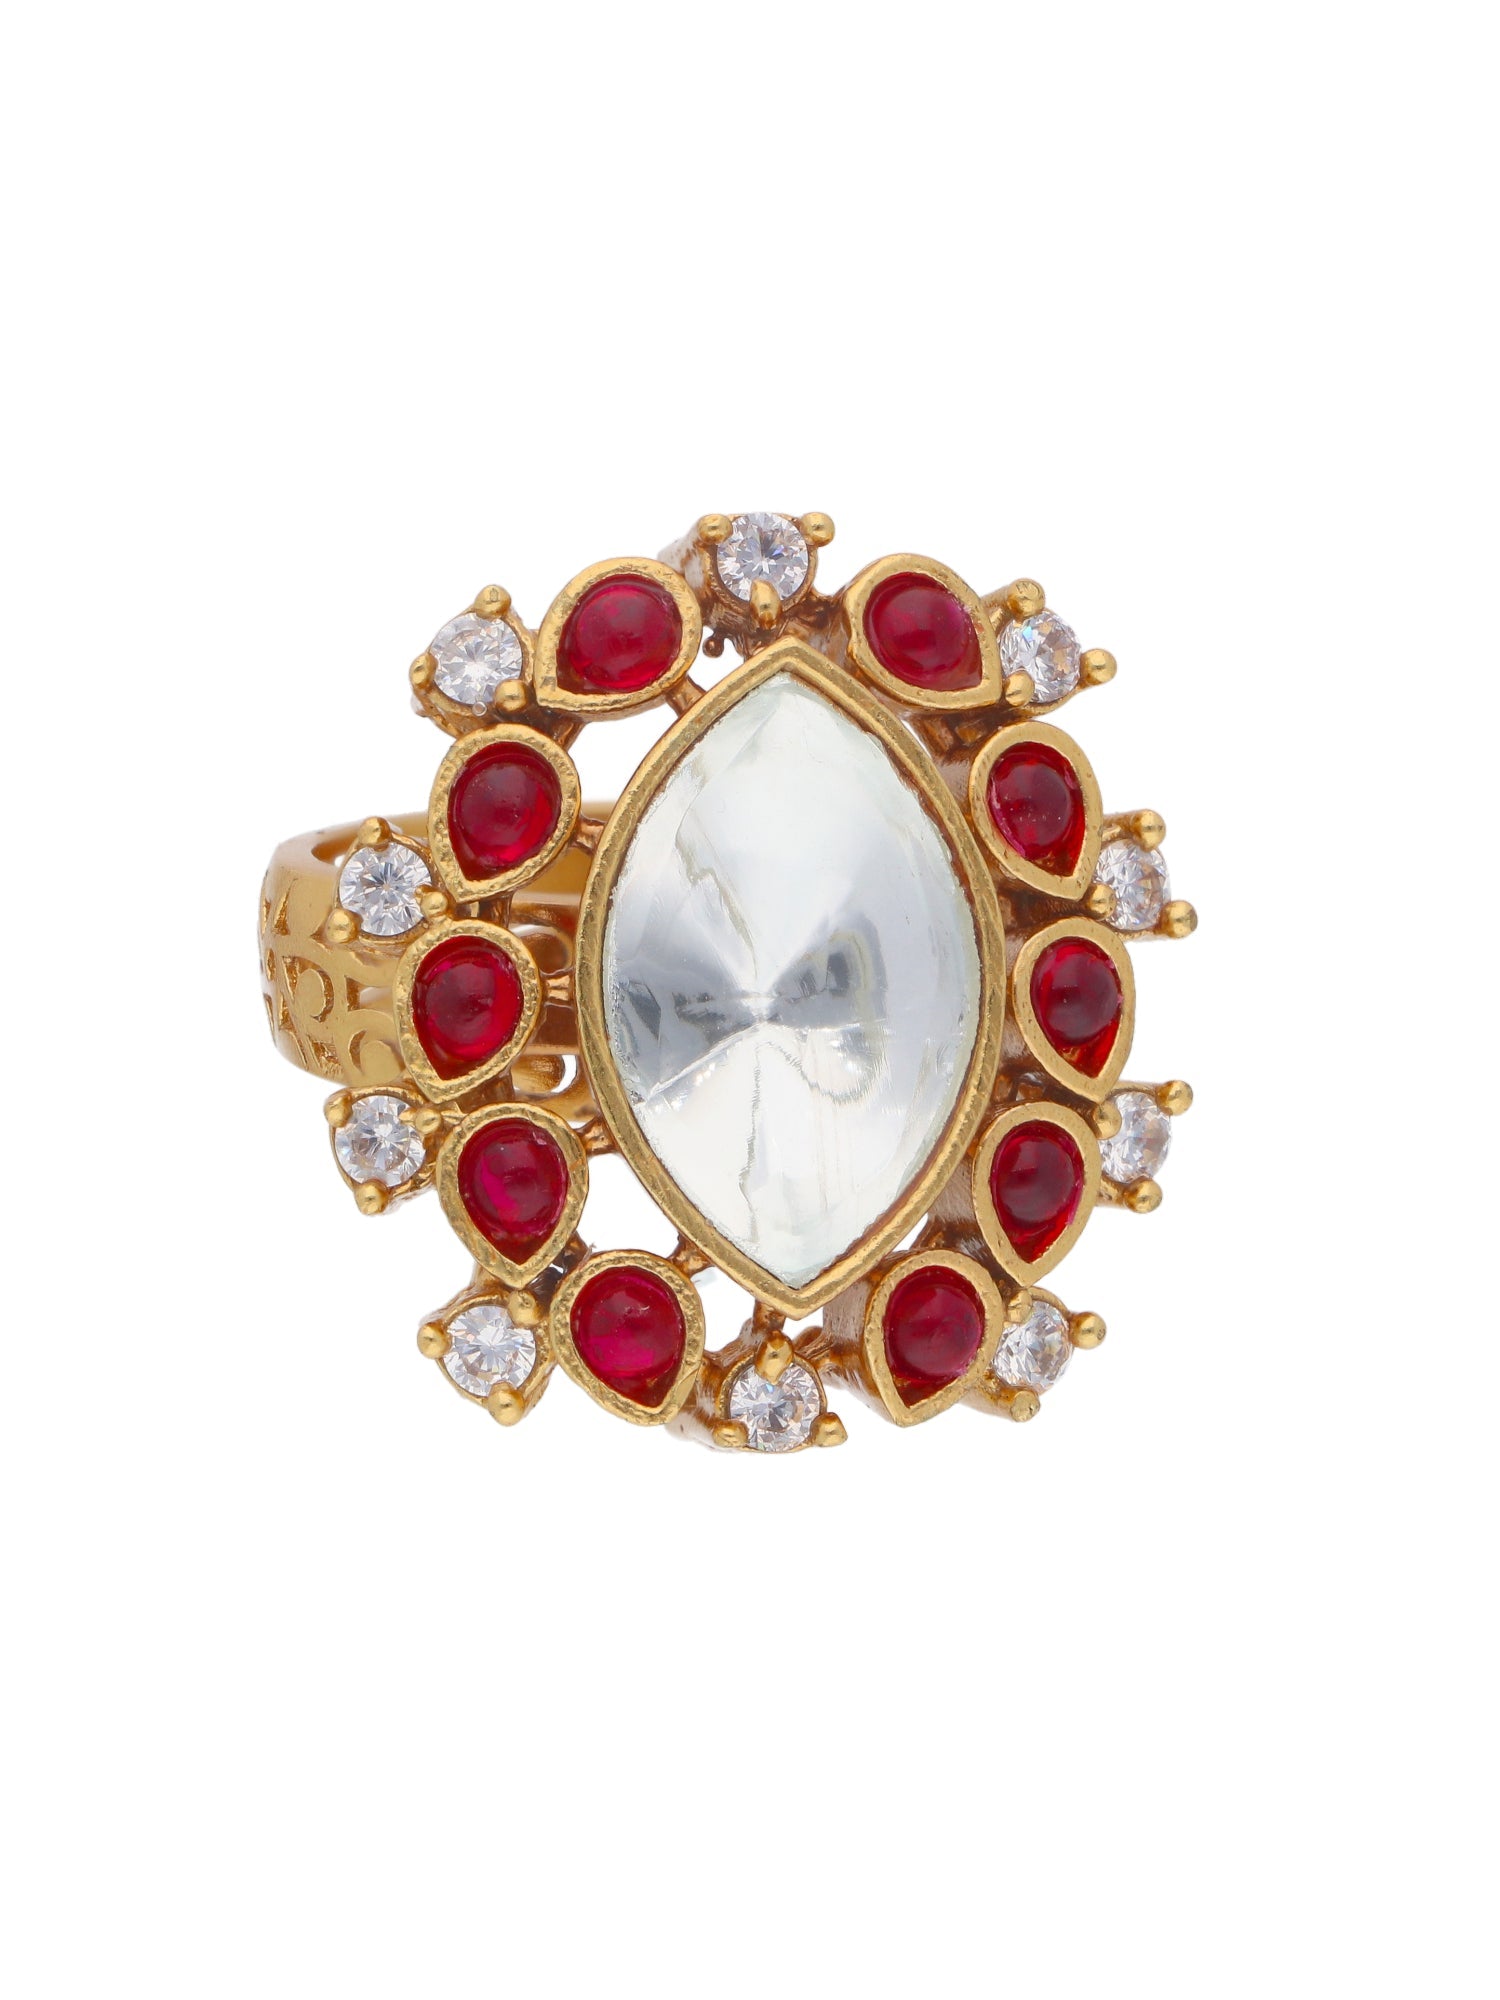  The Zoya Love for Red Kundan Ring